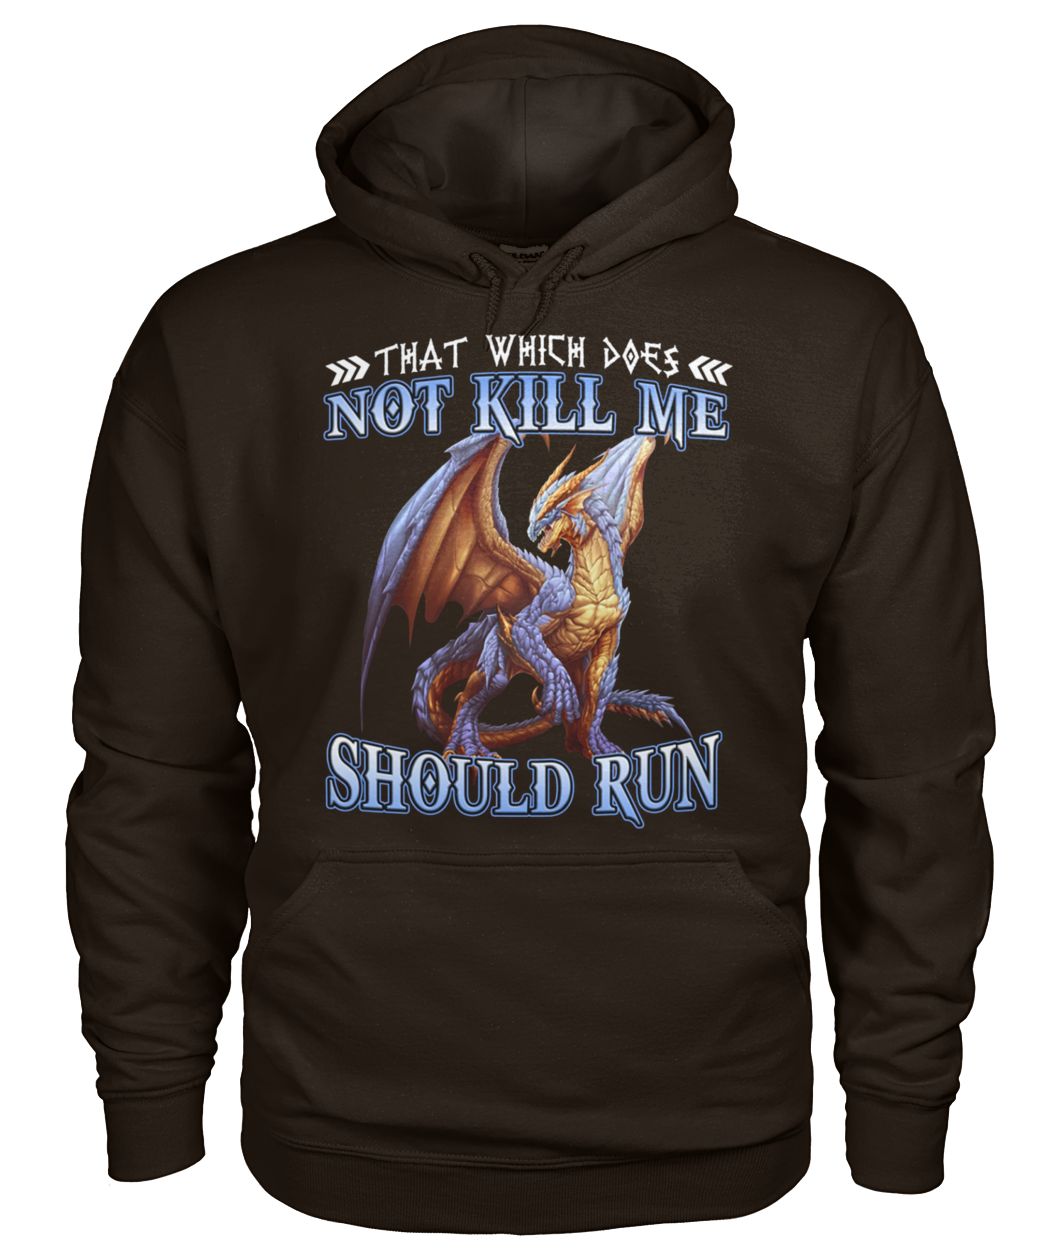 That which does not kill me should run dragon gildan hoodie